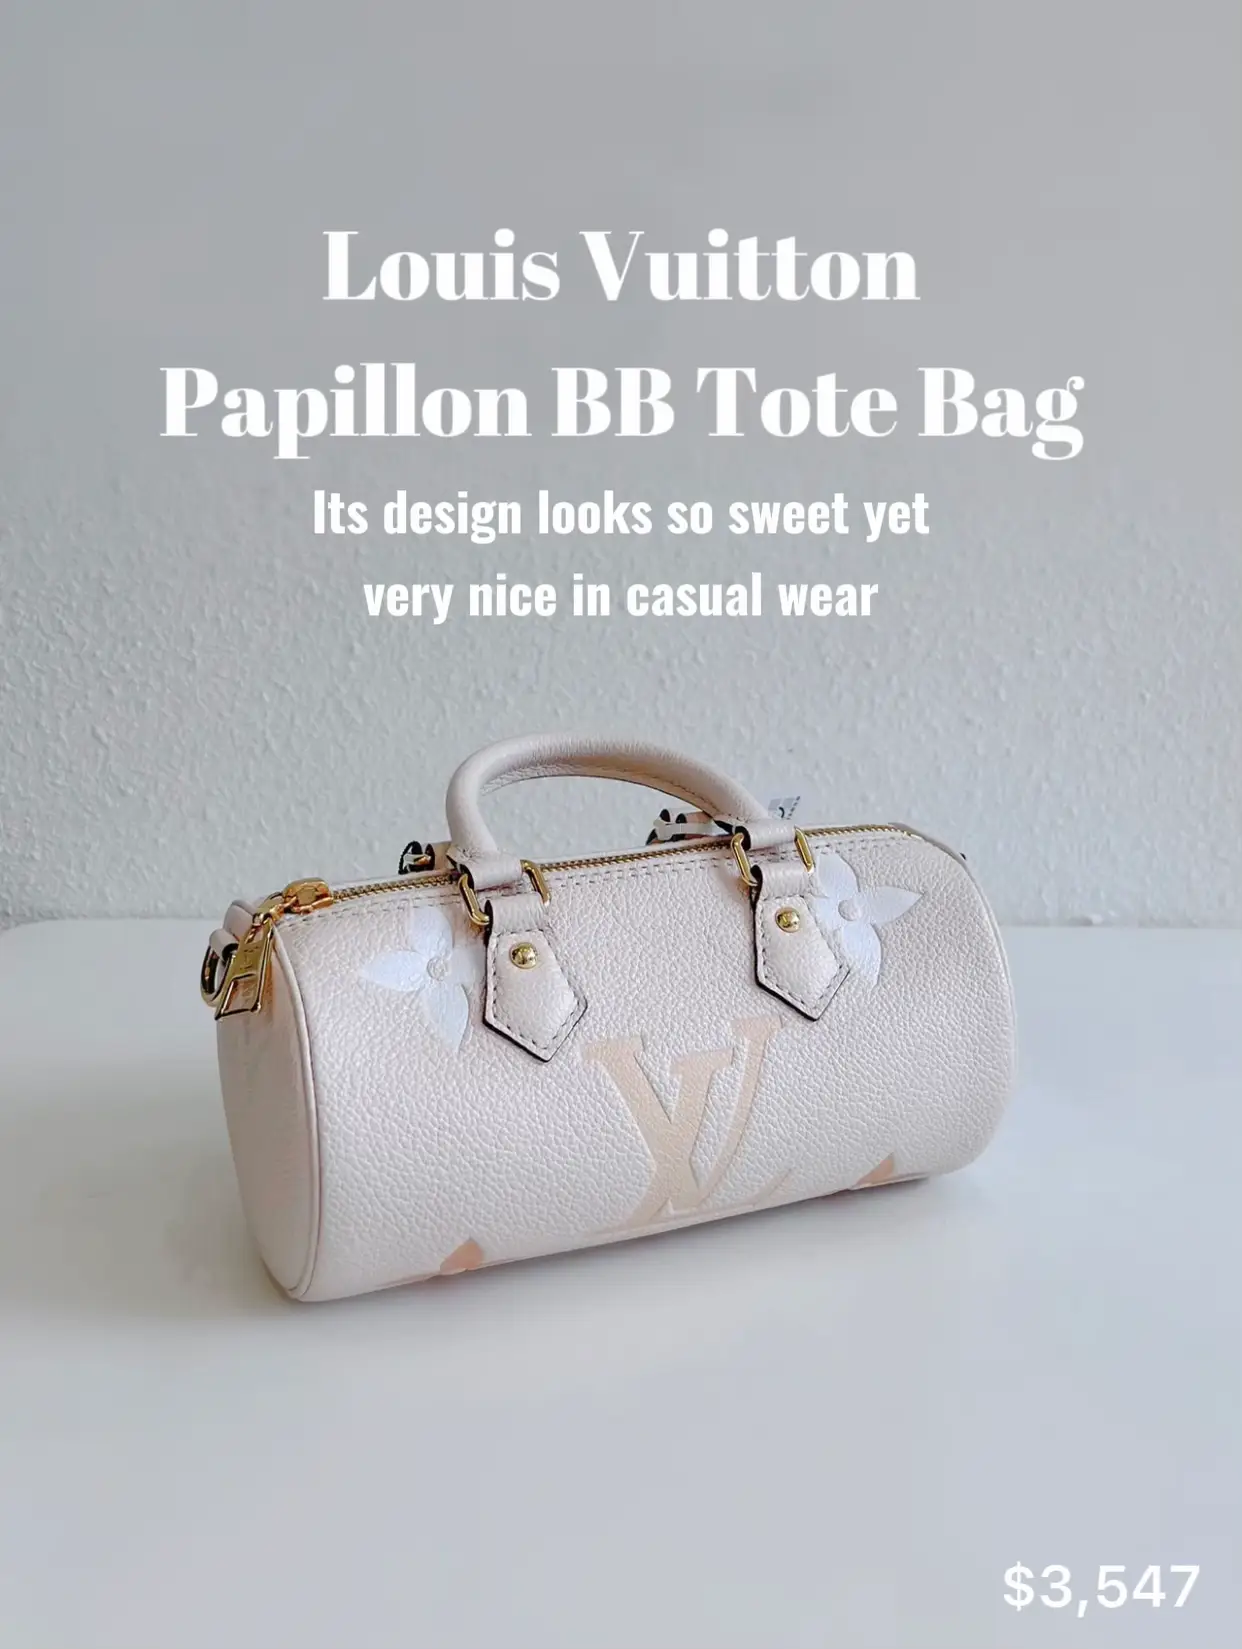 LOUIS VUITTON PAPILLON BB REVIEW AND BAG ORGANIZERS 